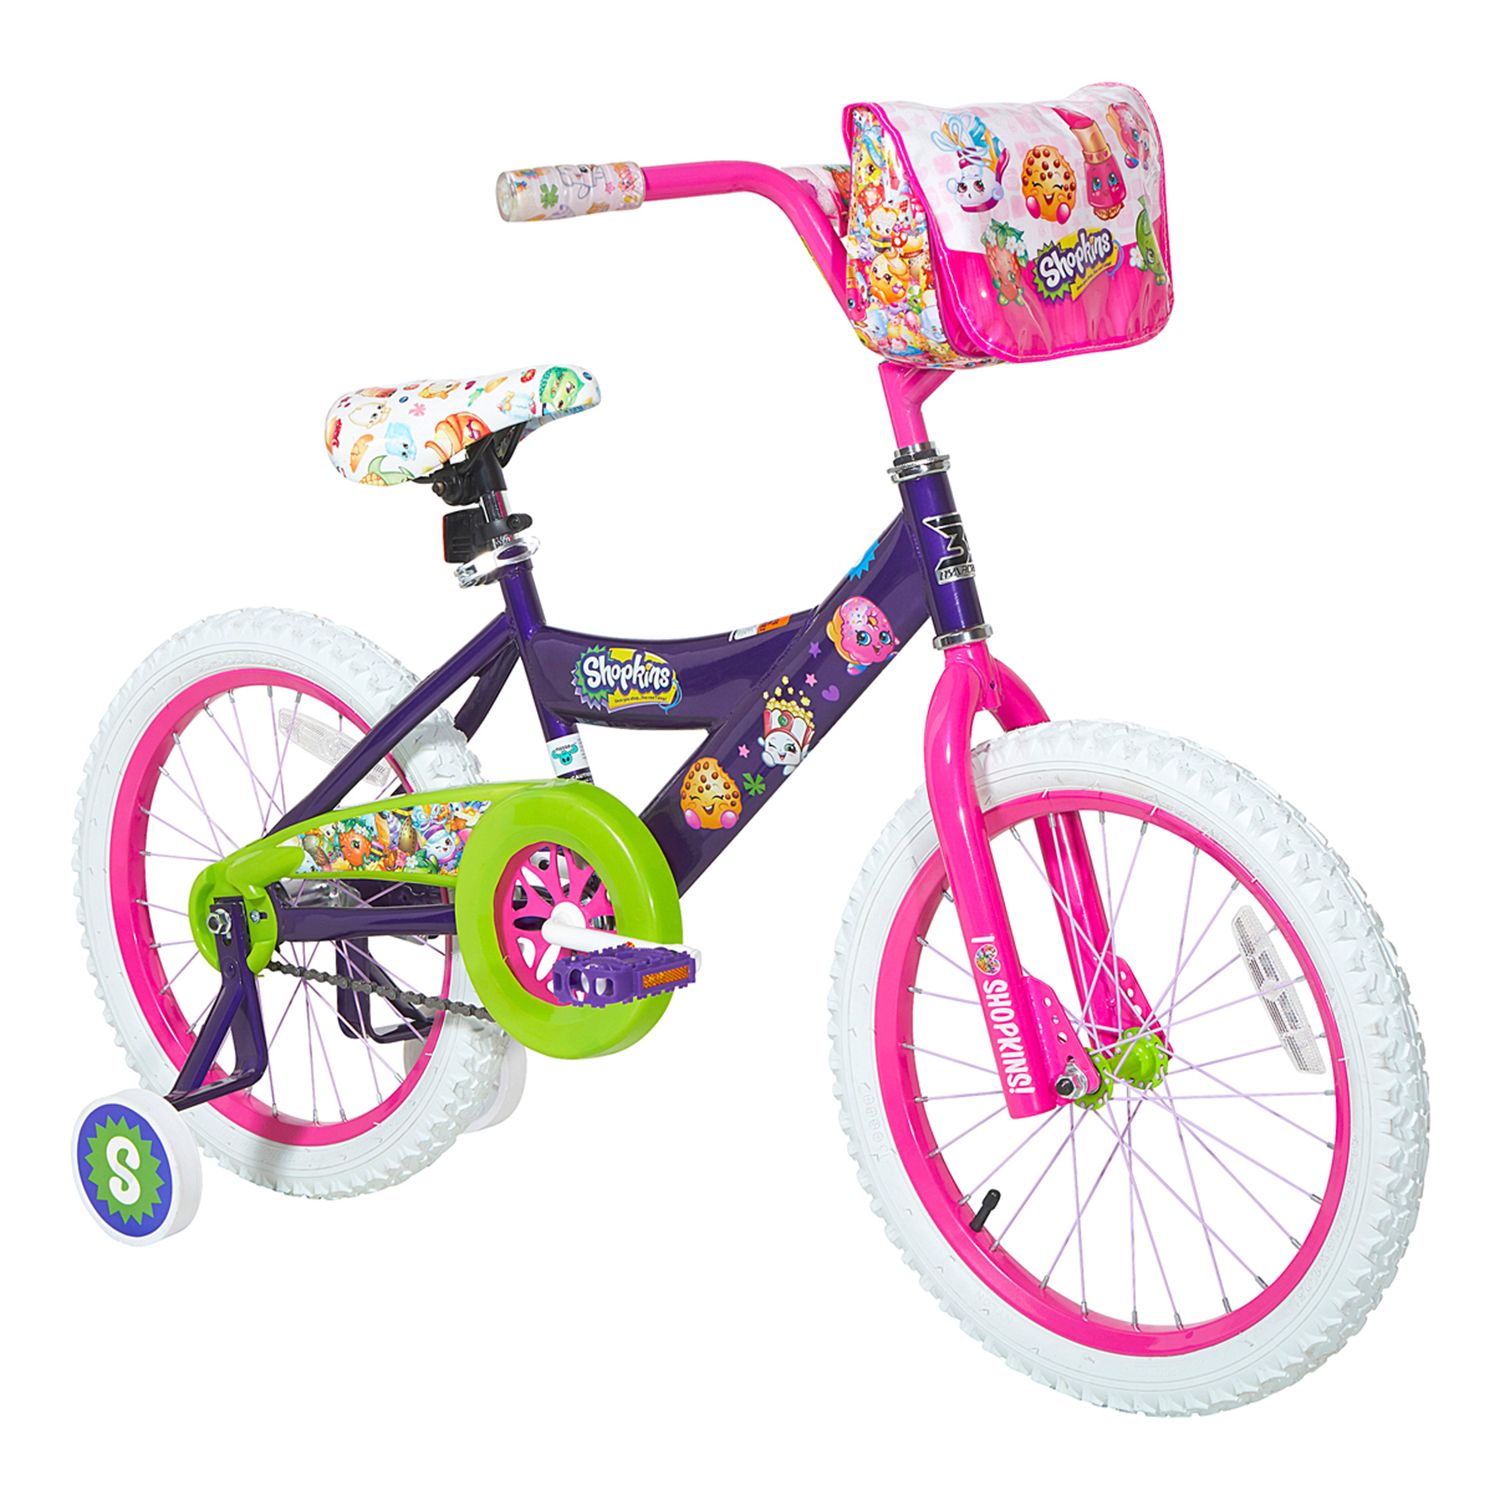 18 inch wheel girls bike